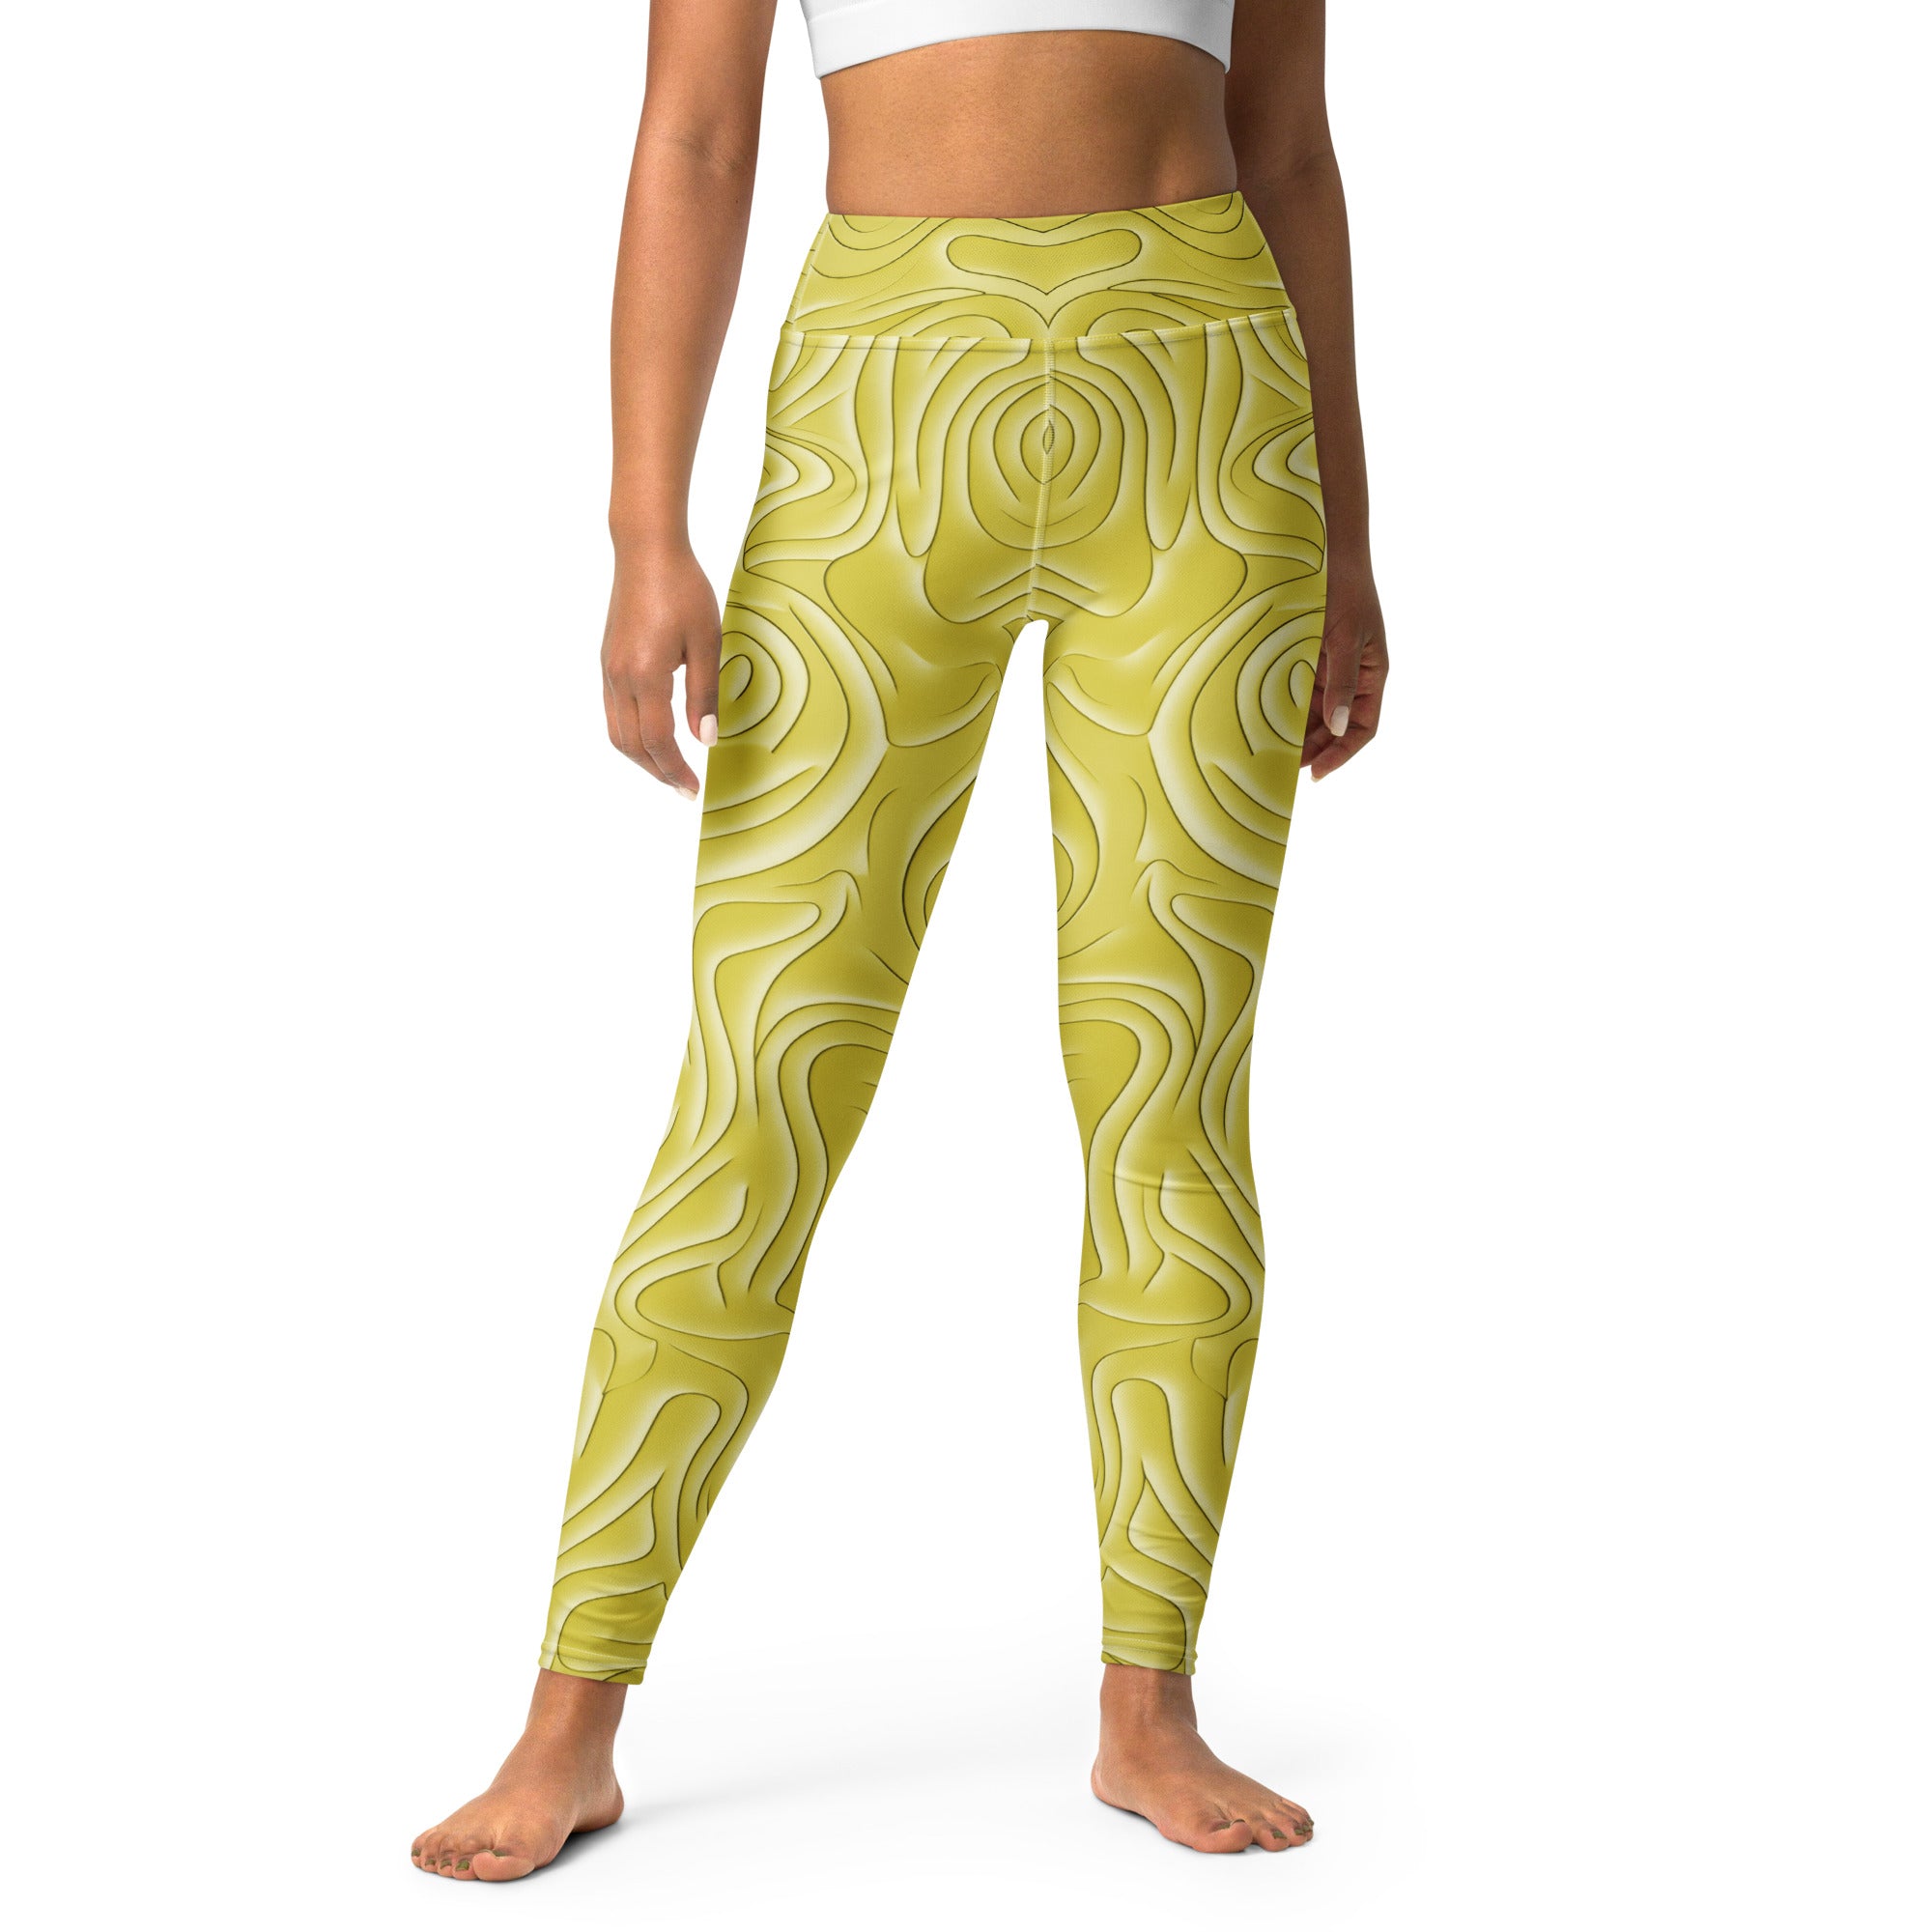 Model wearing Psychedelic Swirl All-Over Print Yoga Leggings.